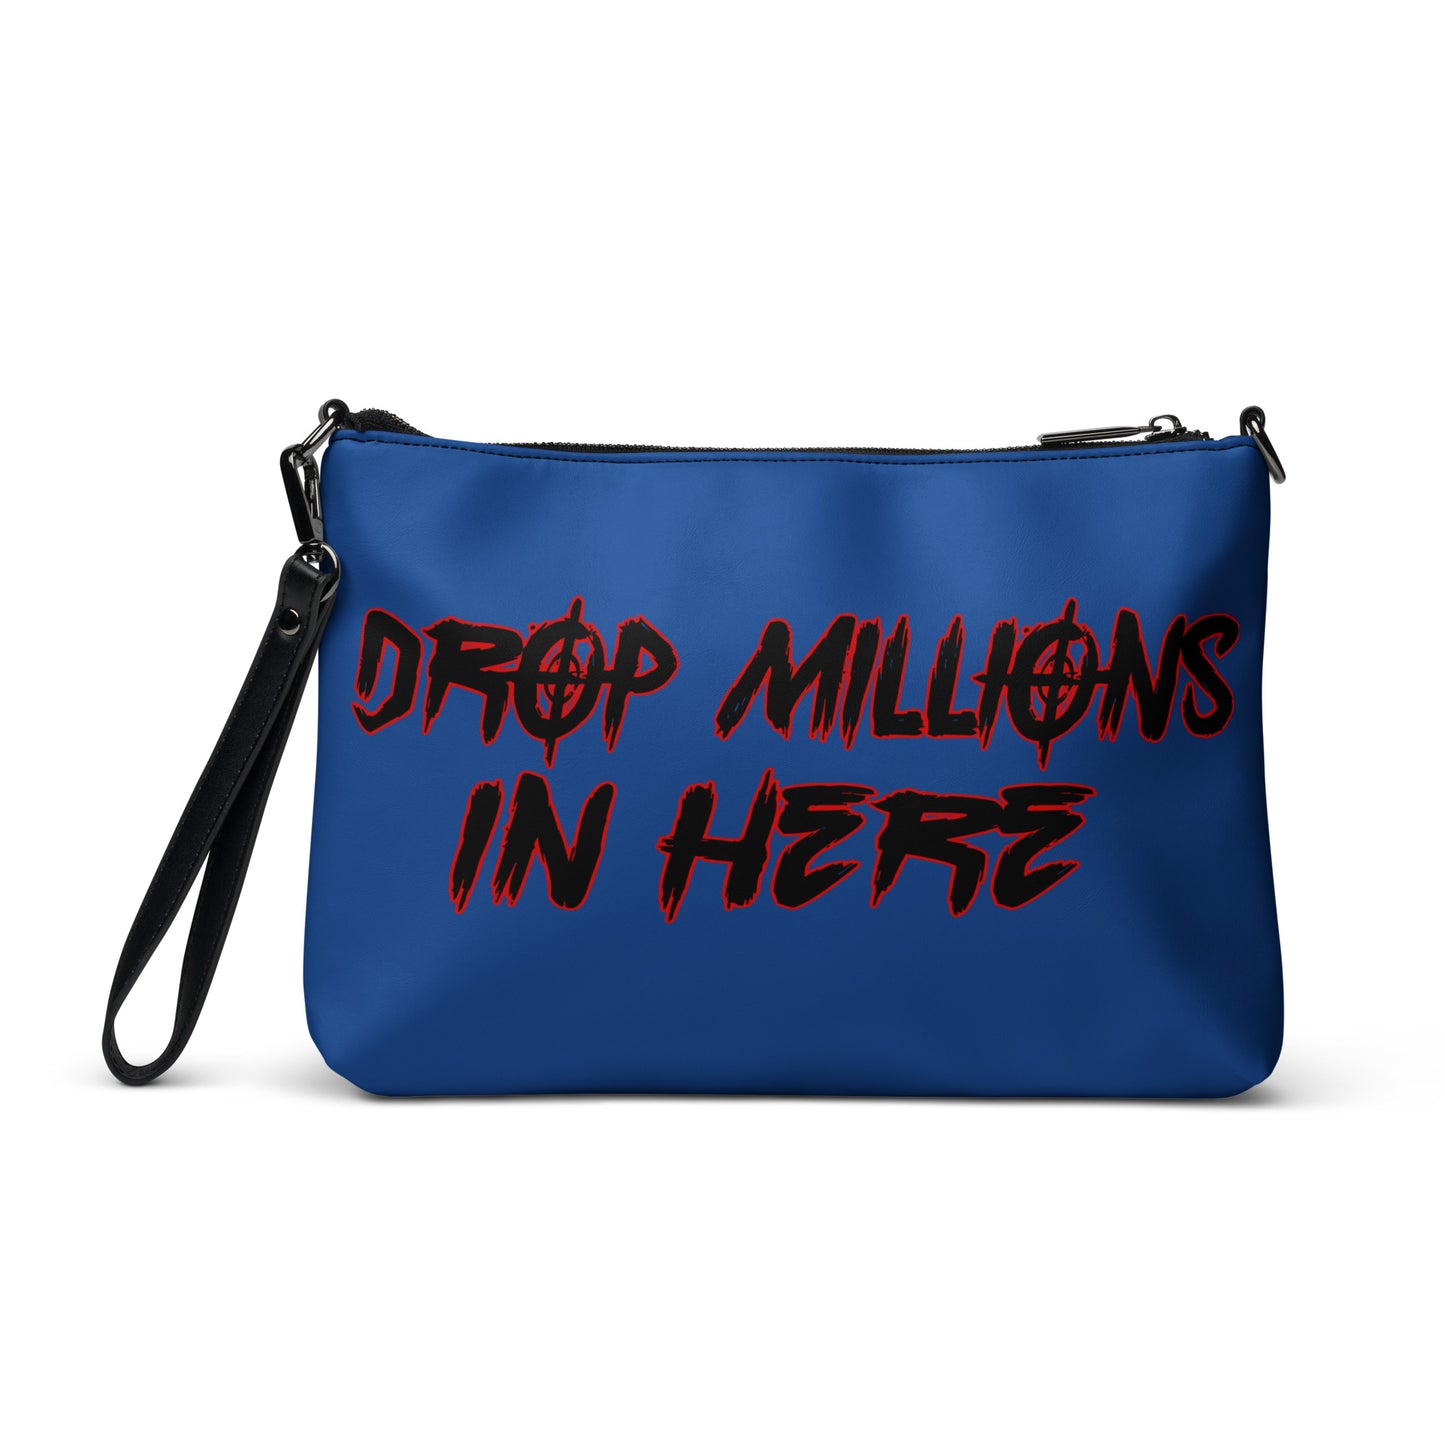 I Love Millions Crossbody bag